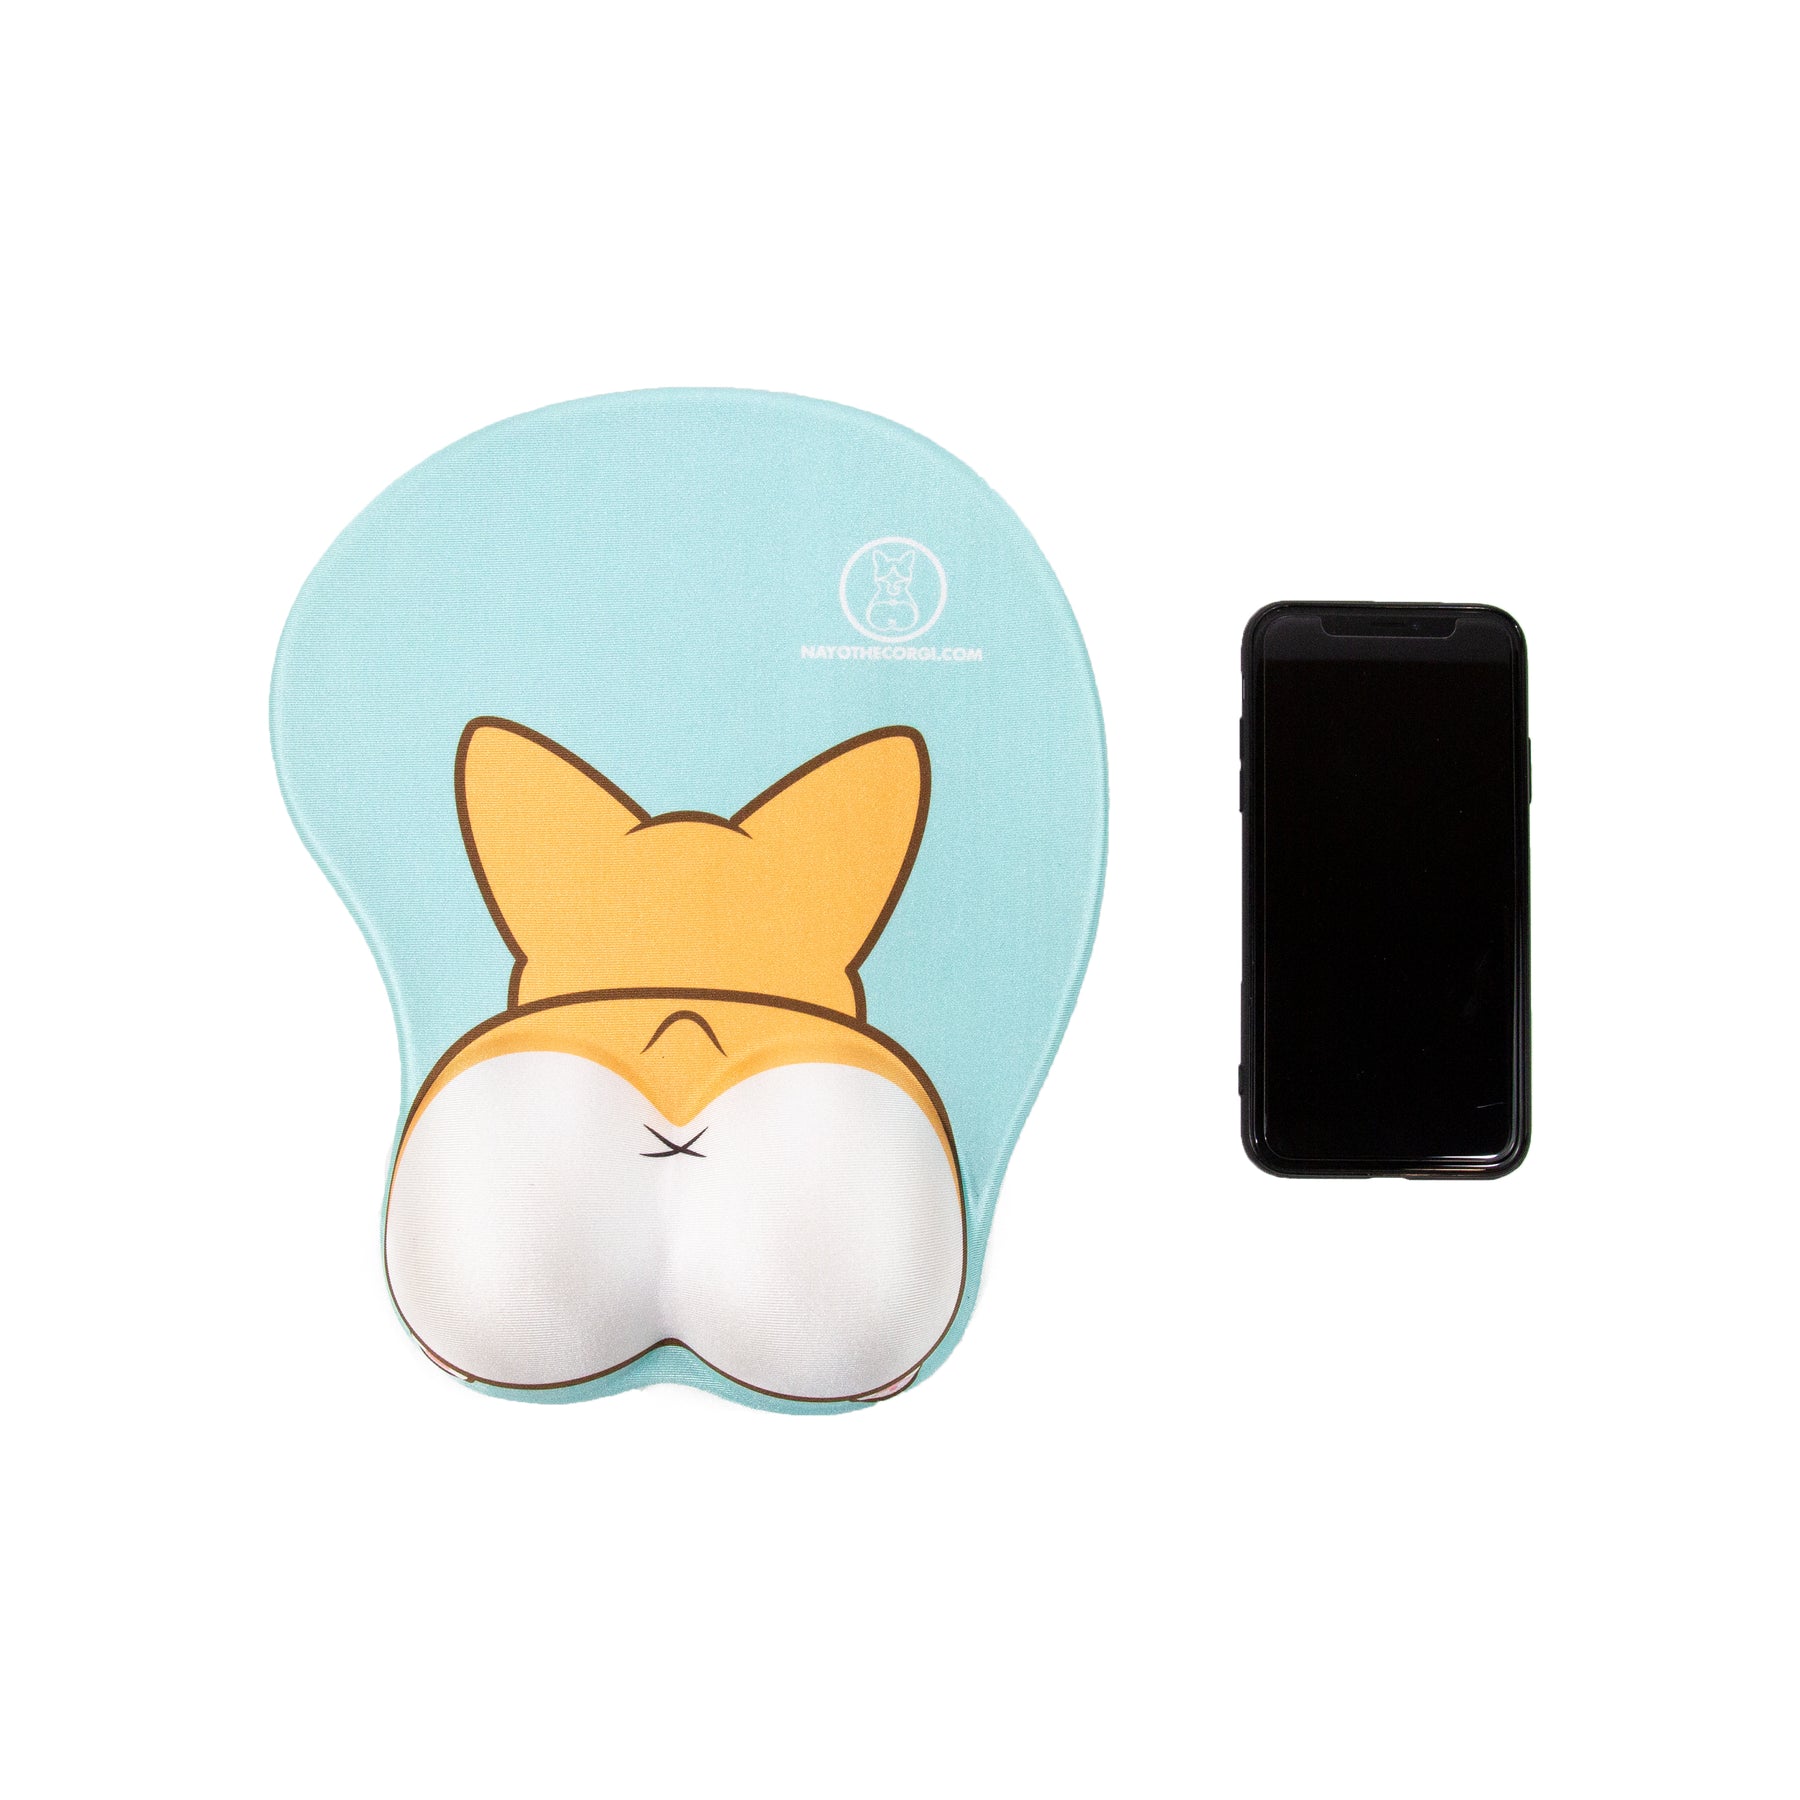 Tan 3D Corgi Butt handrest Mouse Pad Size Comparison With Cell Phone